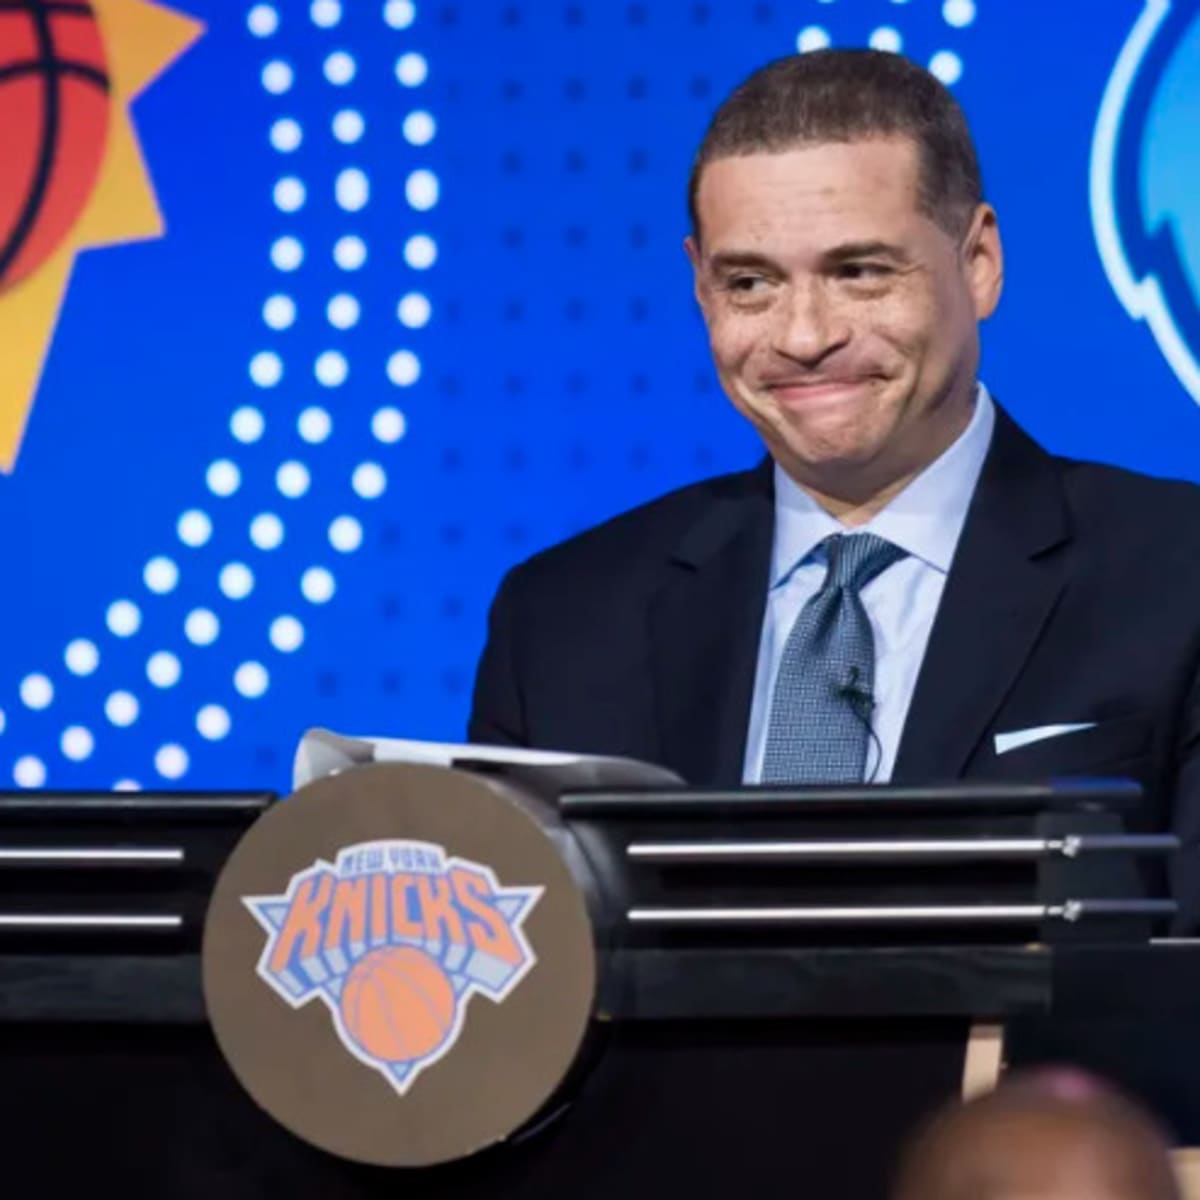 NBA Power Rankings: Knicks Surge Into Top 10 As L.A. Teams Falter